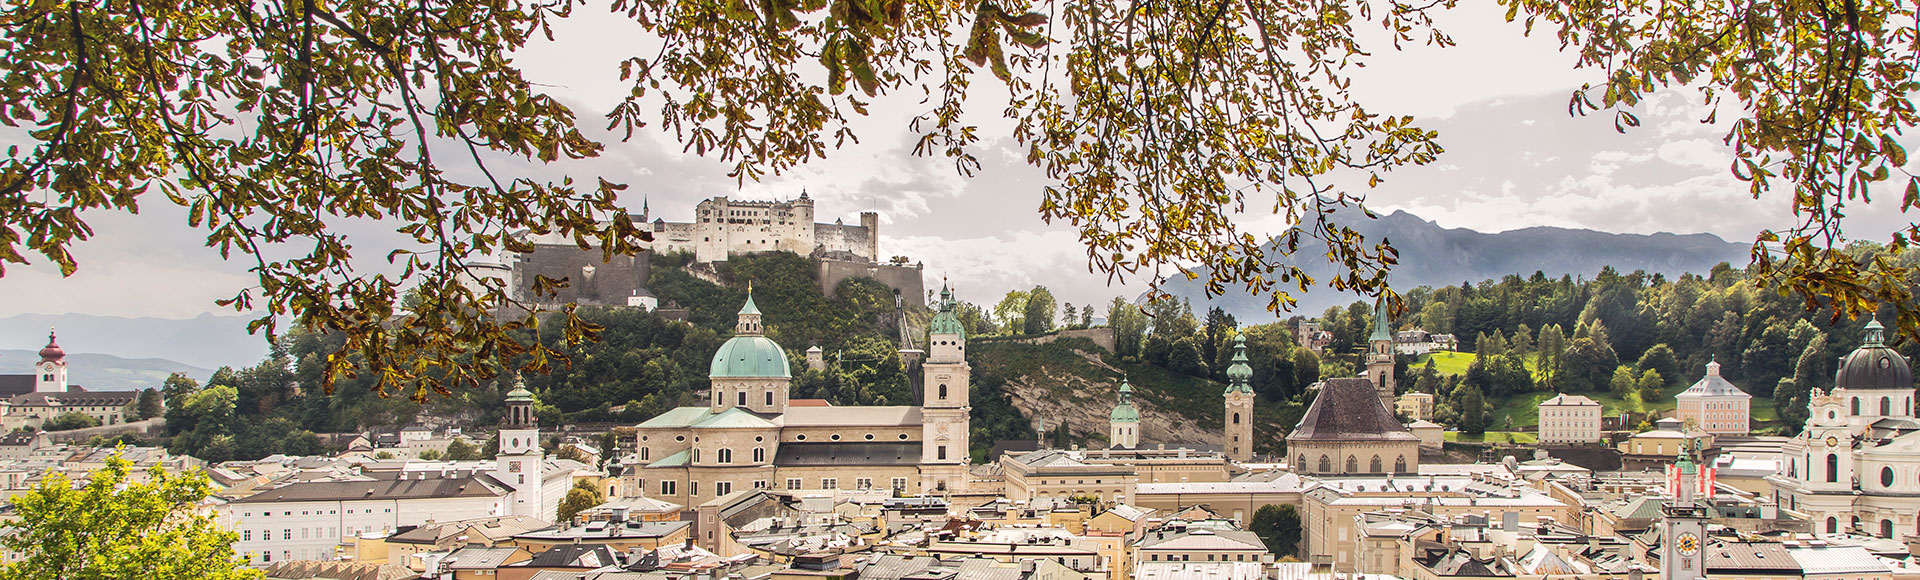 Altstadt Salzburg - Ausflugsziel im Salzburger Land